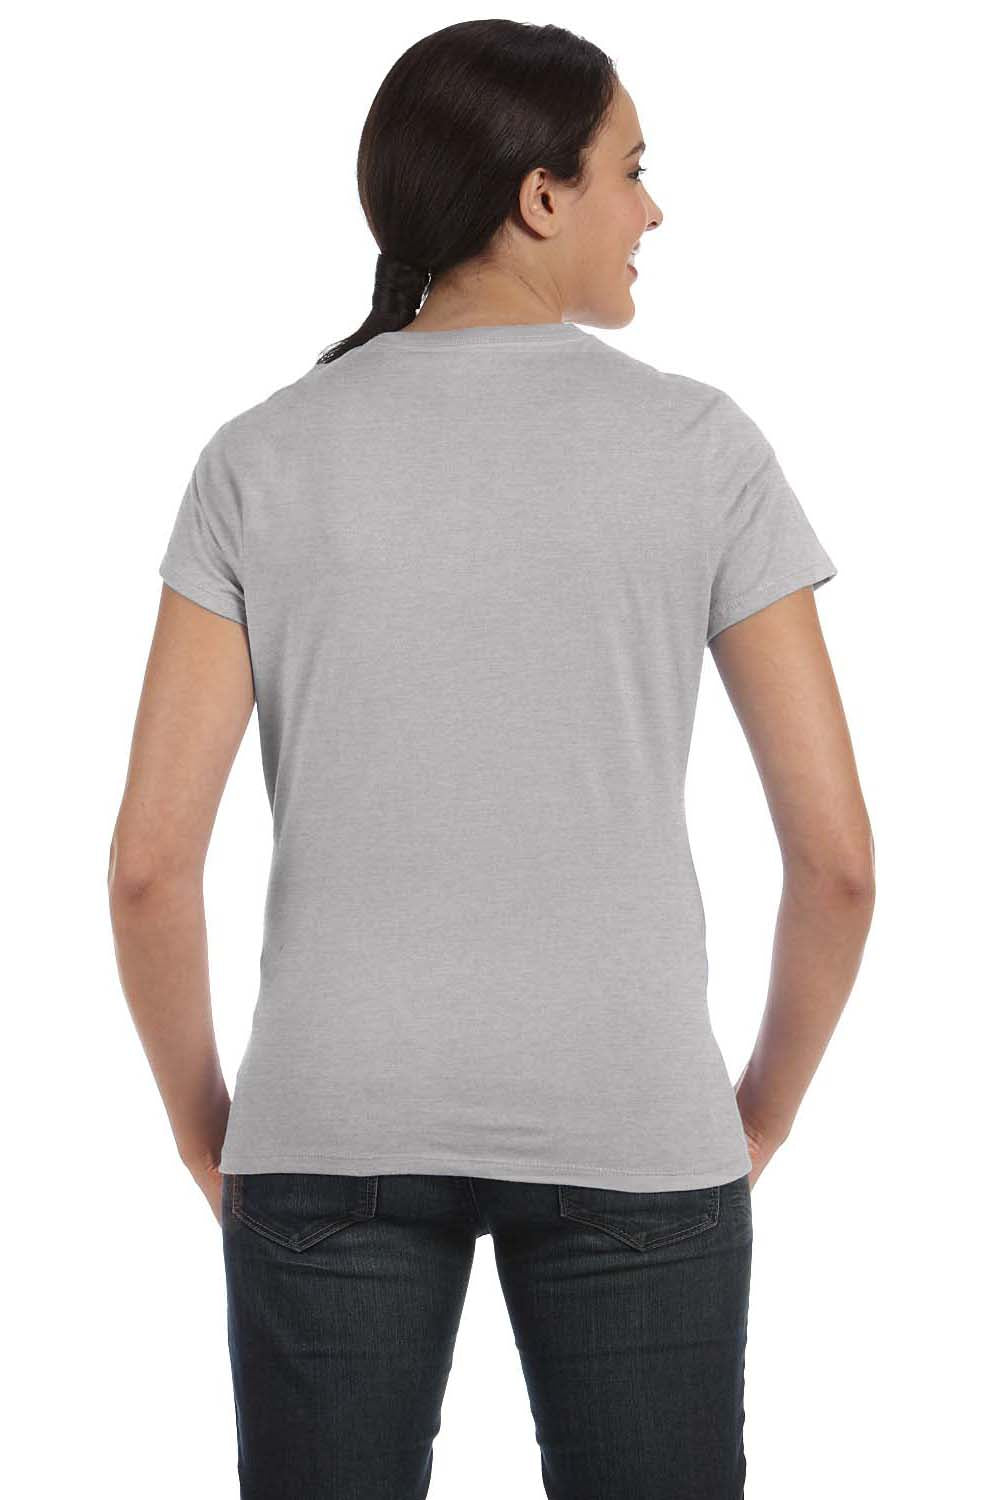 Hanes SL04 Womens Nano-T Short Sleeve Crewneck T-Shirt Light Steel Grey Back